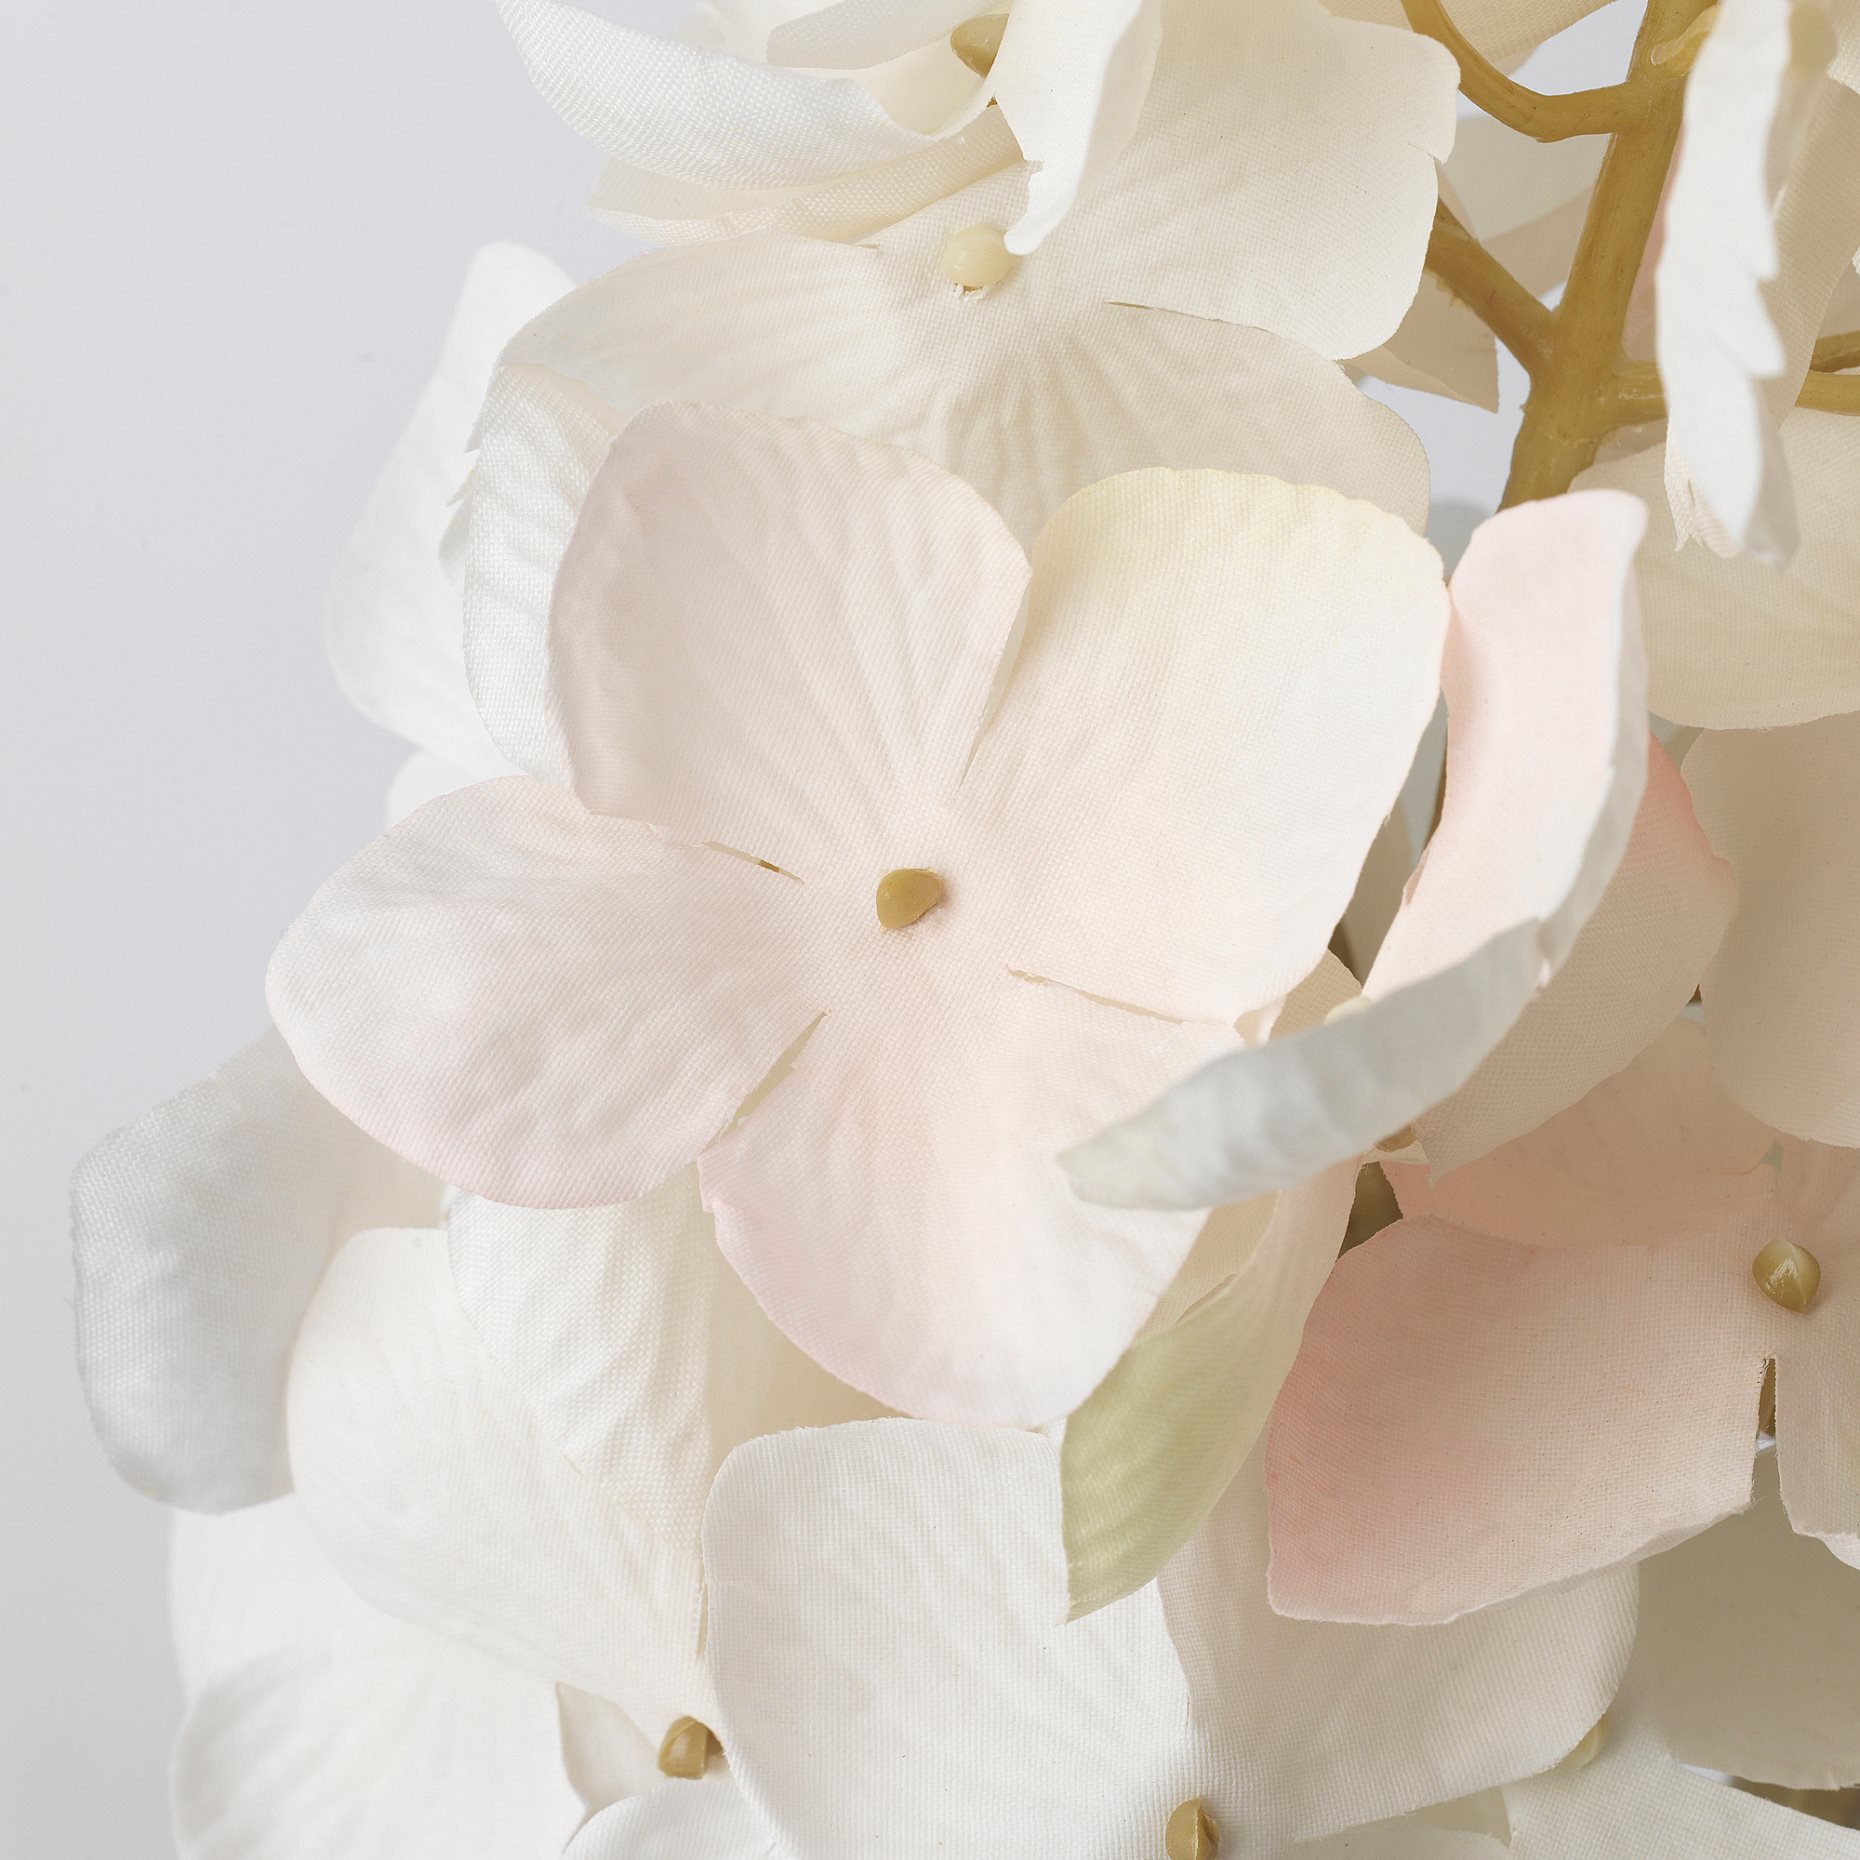 SMYCKA, τεχνητό λουλούδι/Ορτανσία, 65 cm, 405.601.17